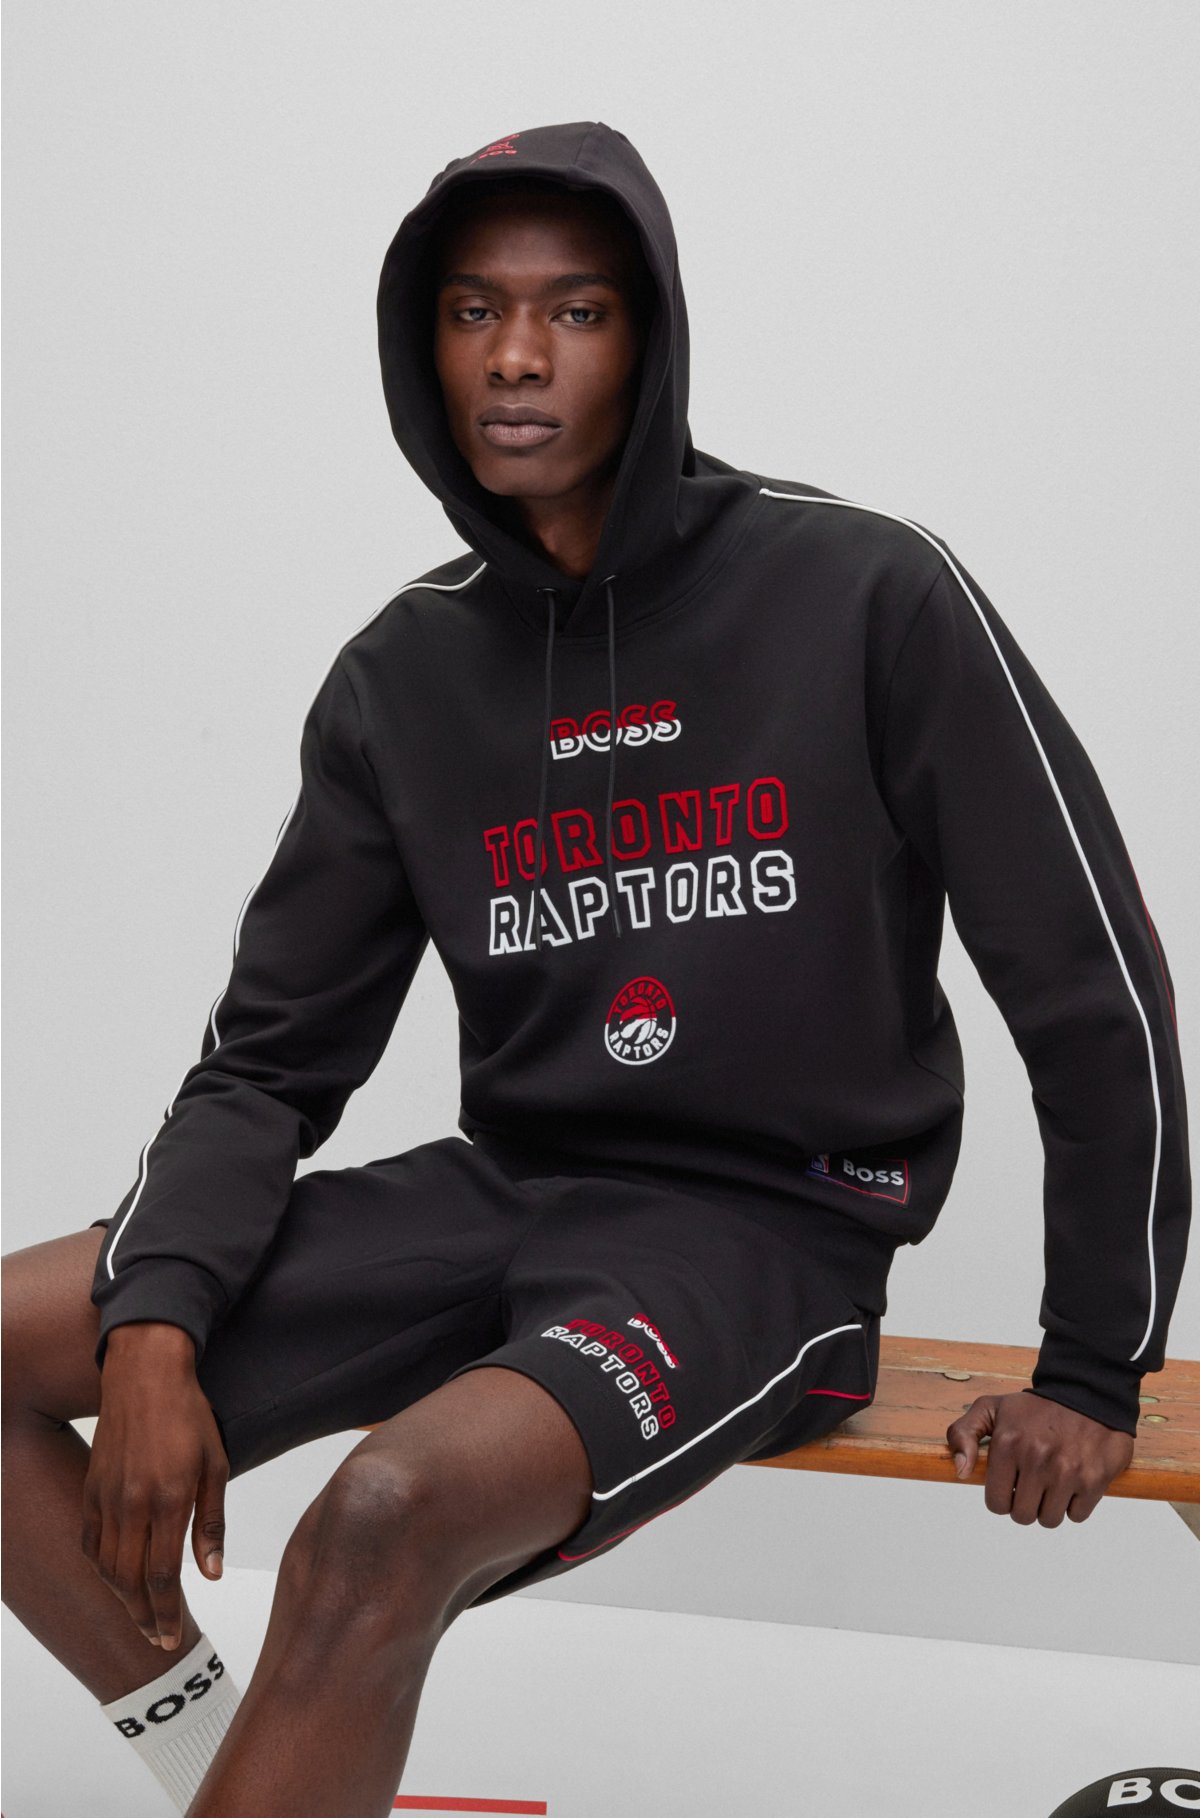 Toronto Raptors Hoodies, Raptors Sweatshirts